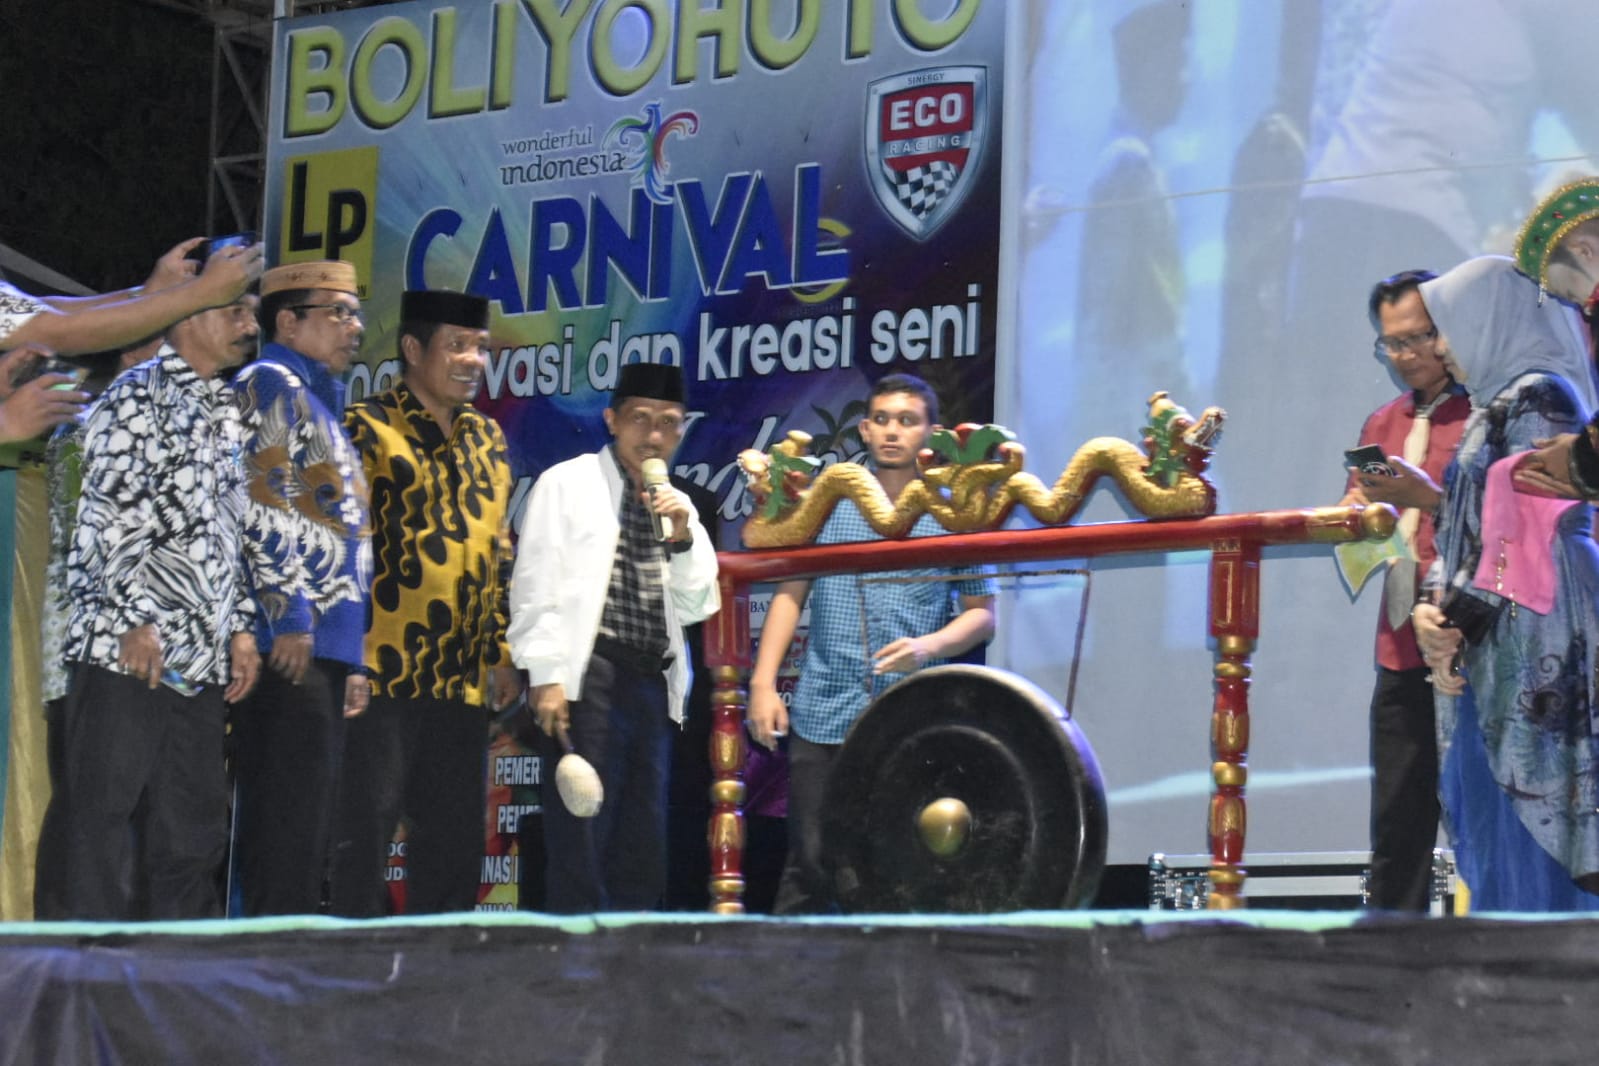 Nelson Bangga Inovasi Budaya di Perayaan Boliyohuto Carnival